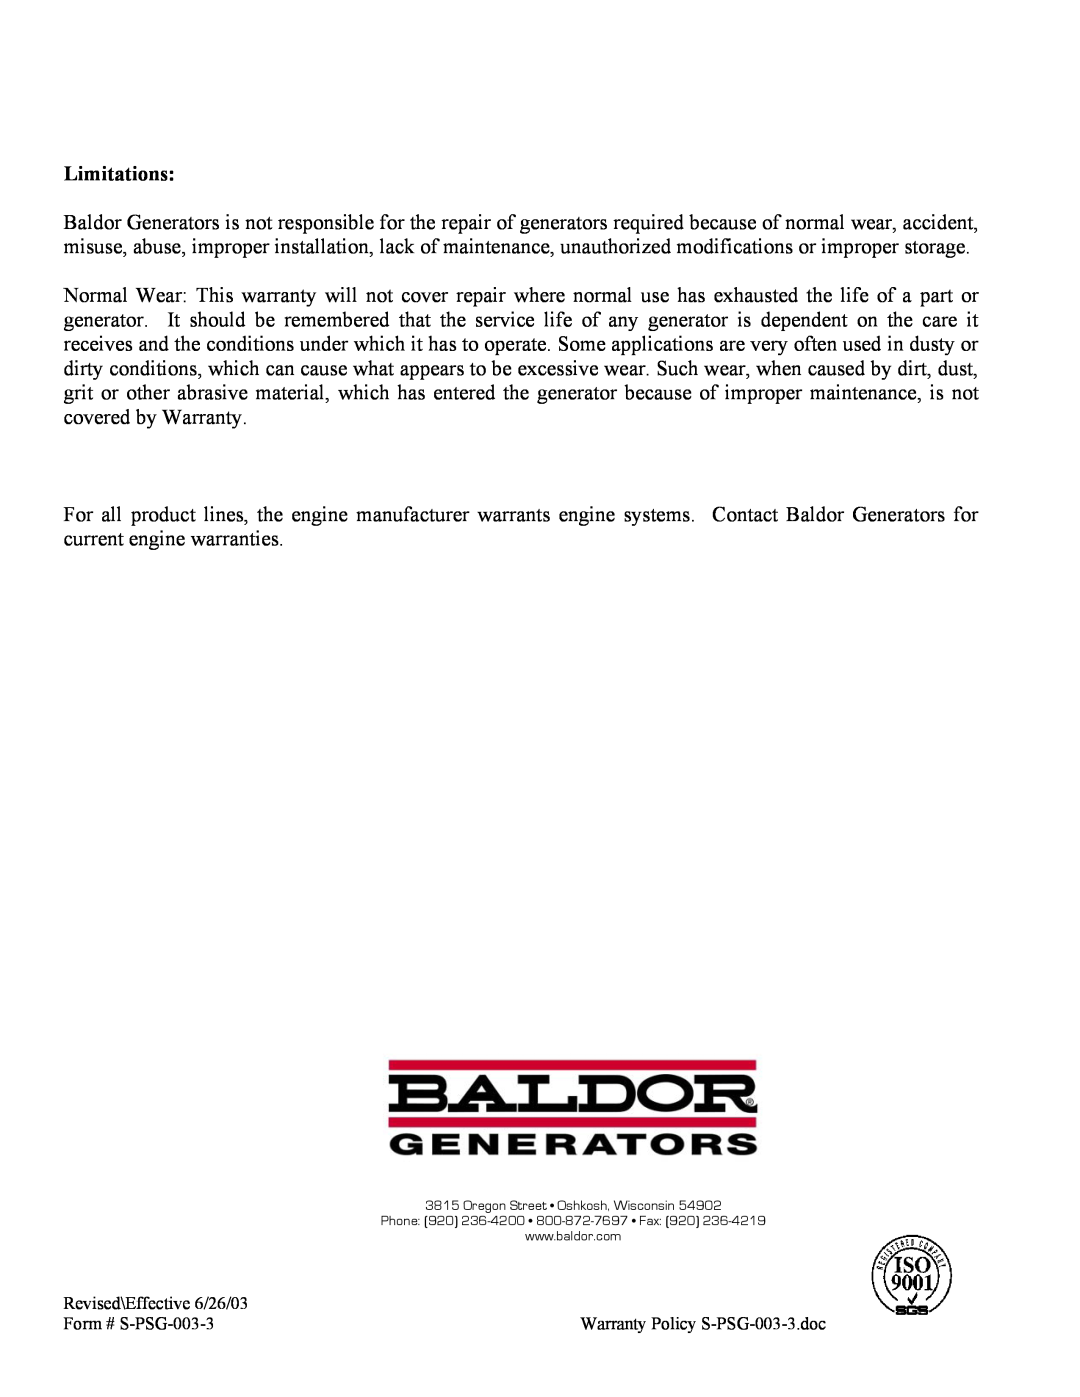 Baldor ISO9001 manual Limitations, Oregon Street Oshkosh, Wisconsin, Phone 920 236-4200 800-872-7697 Fax 920 